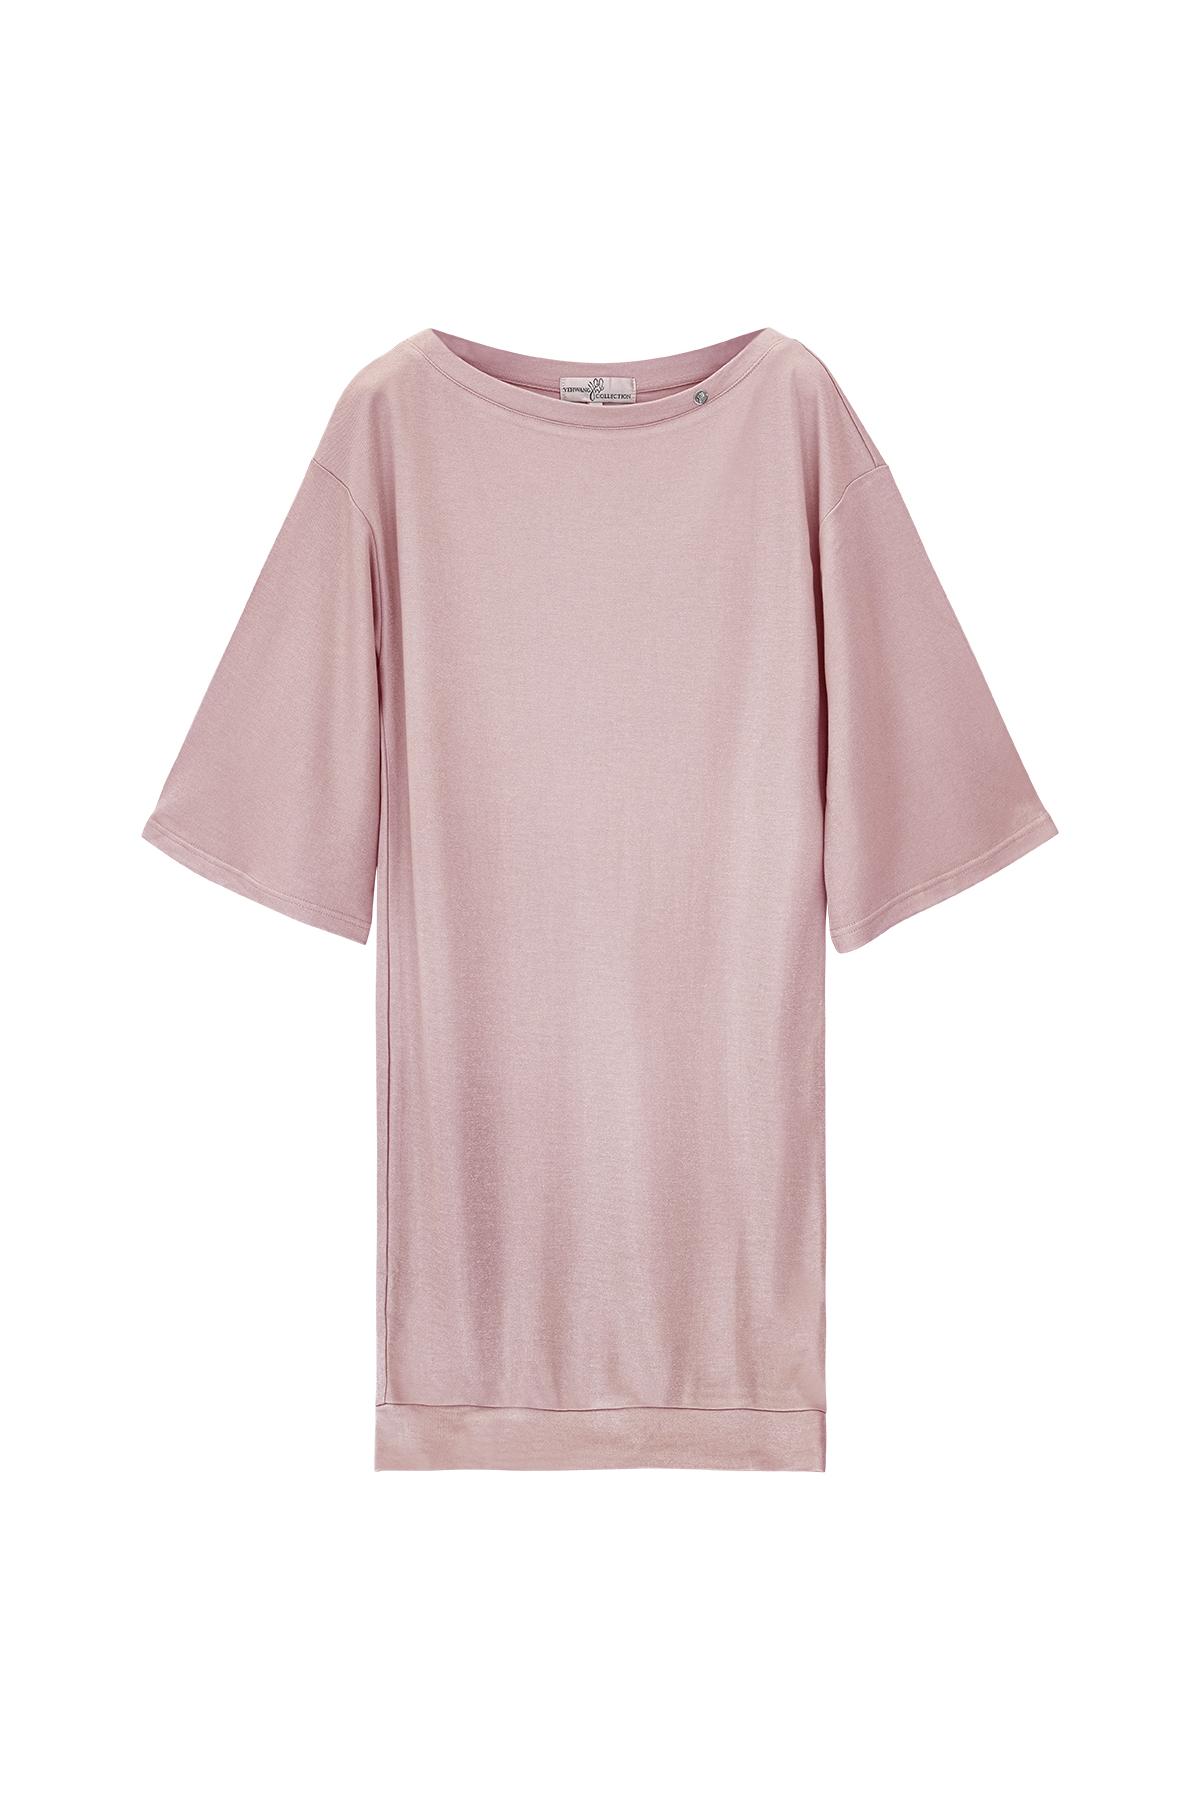 Parlak kaplamalı tişört elbise Pink M h5 